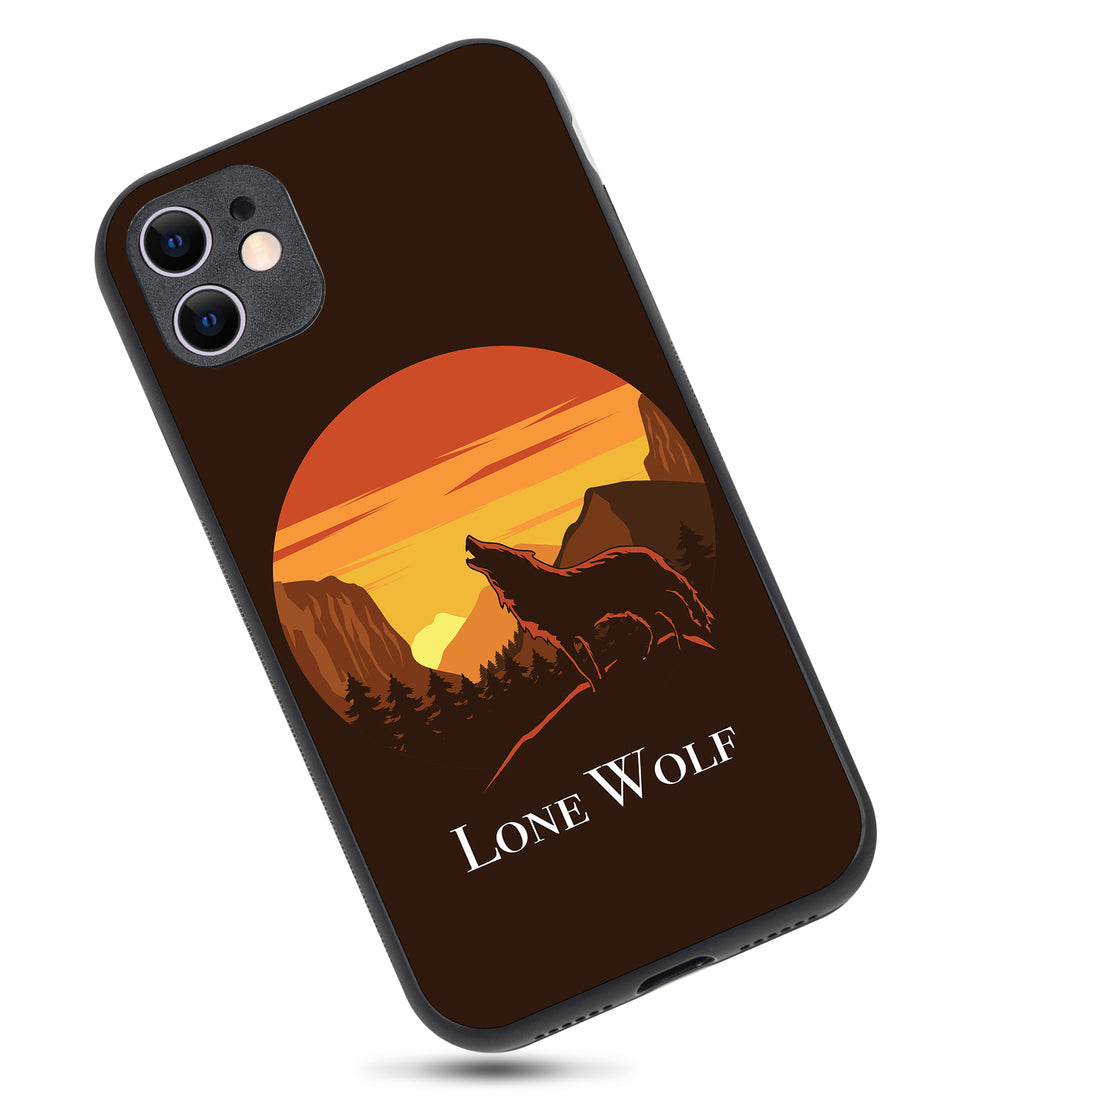 Lone Wolf Cartoon iPhone 11 Case